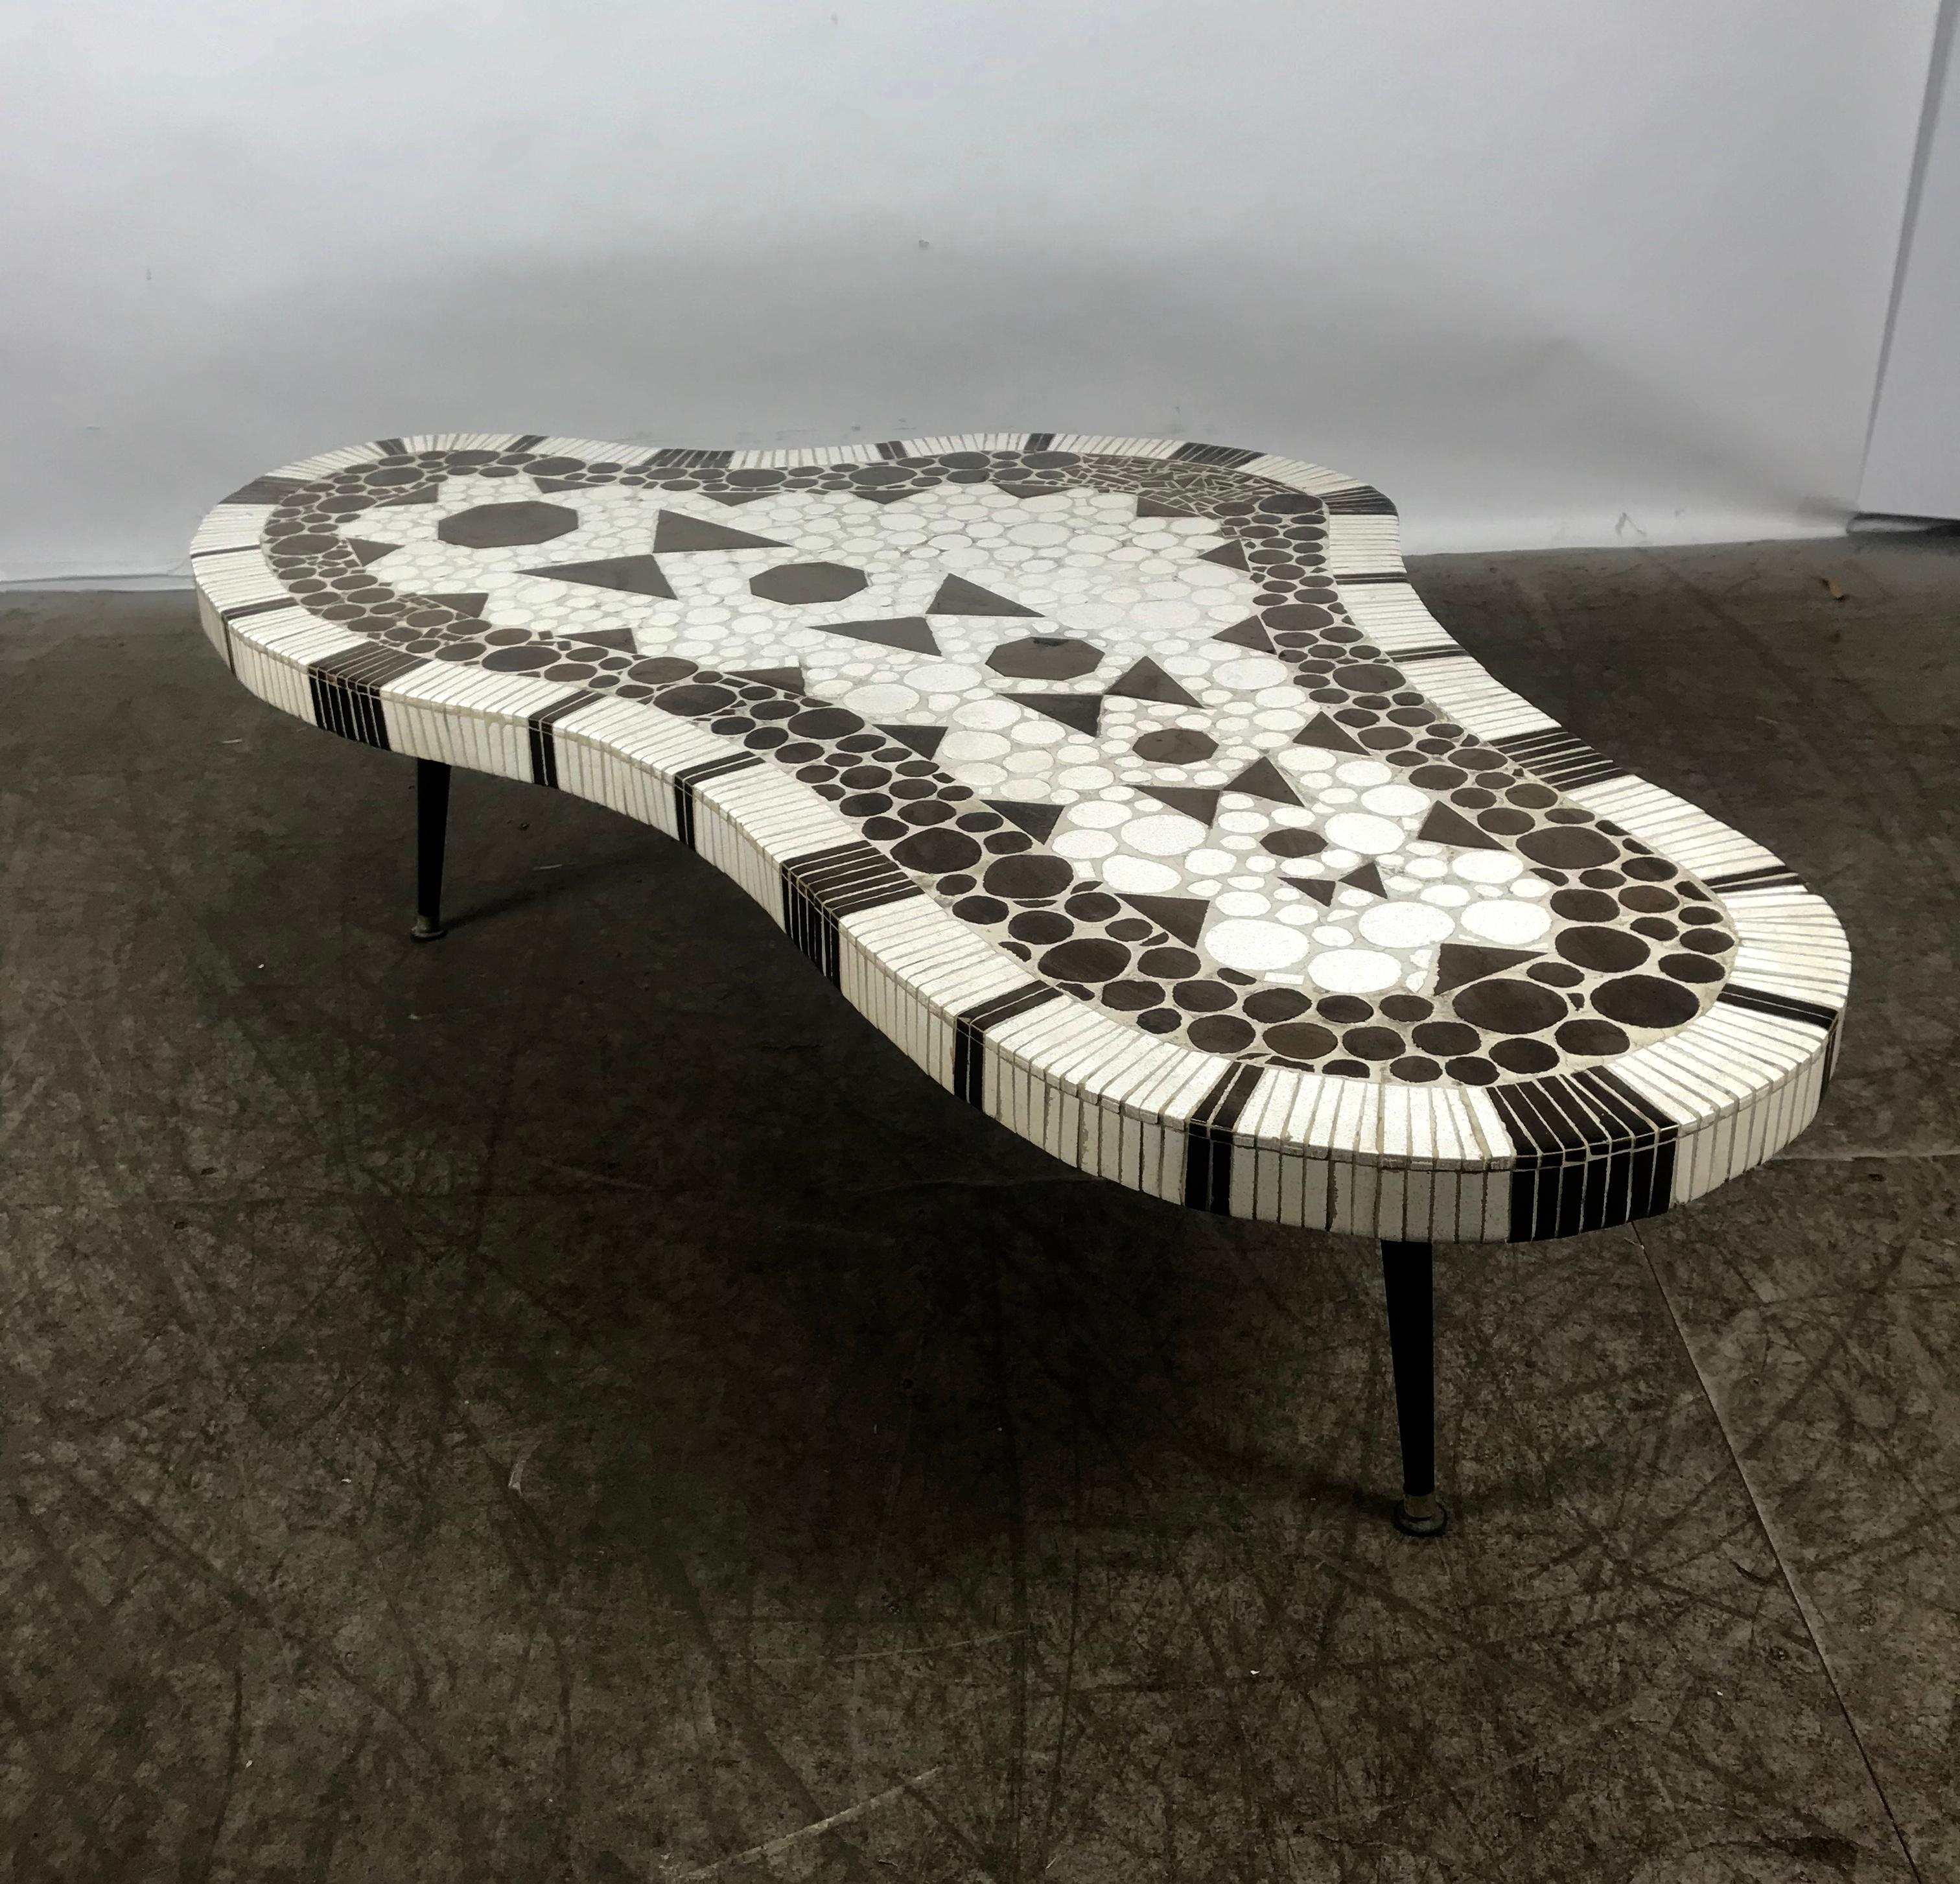 Hand-Crafted Stunning Mosaic Tile Amoeba Shape Cocktail Table, Richard Hohenberg